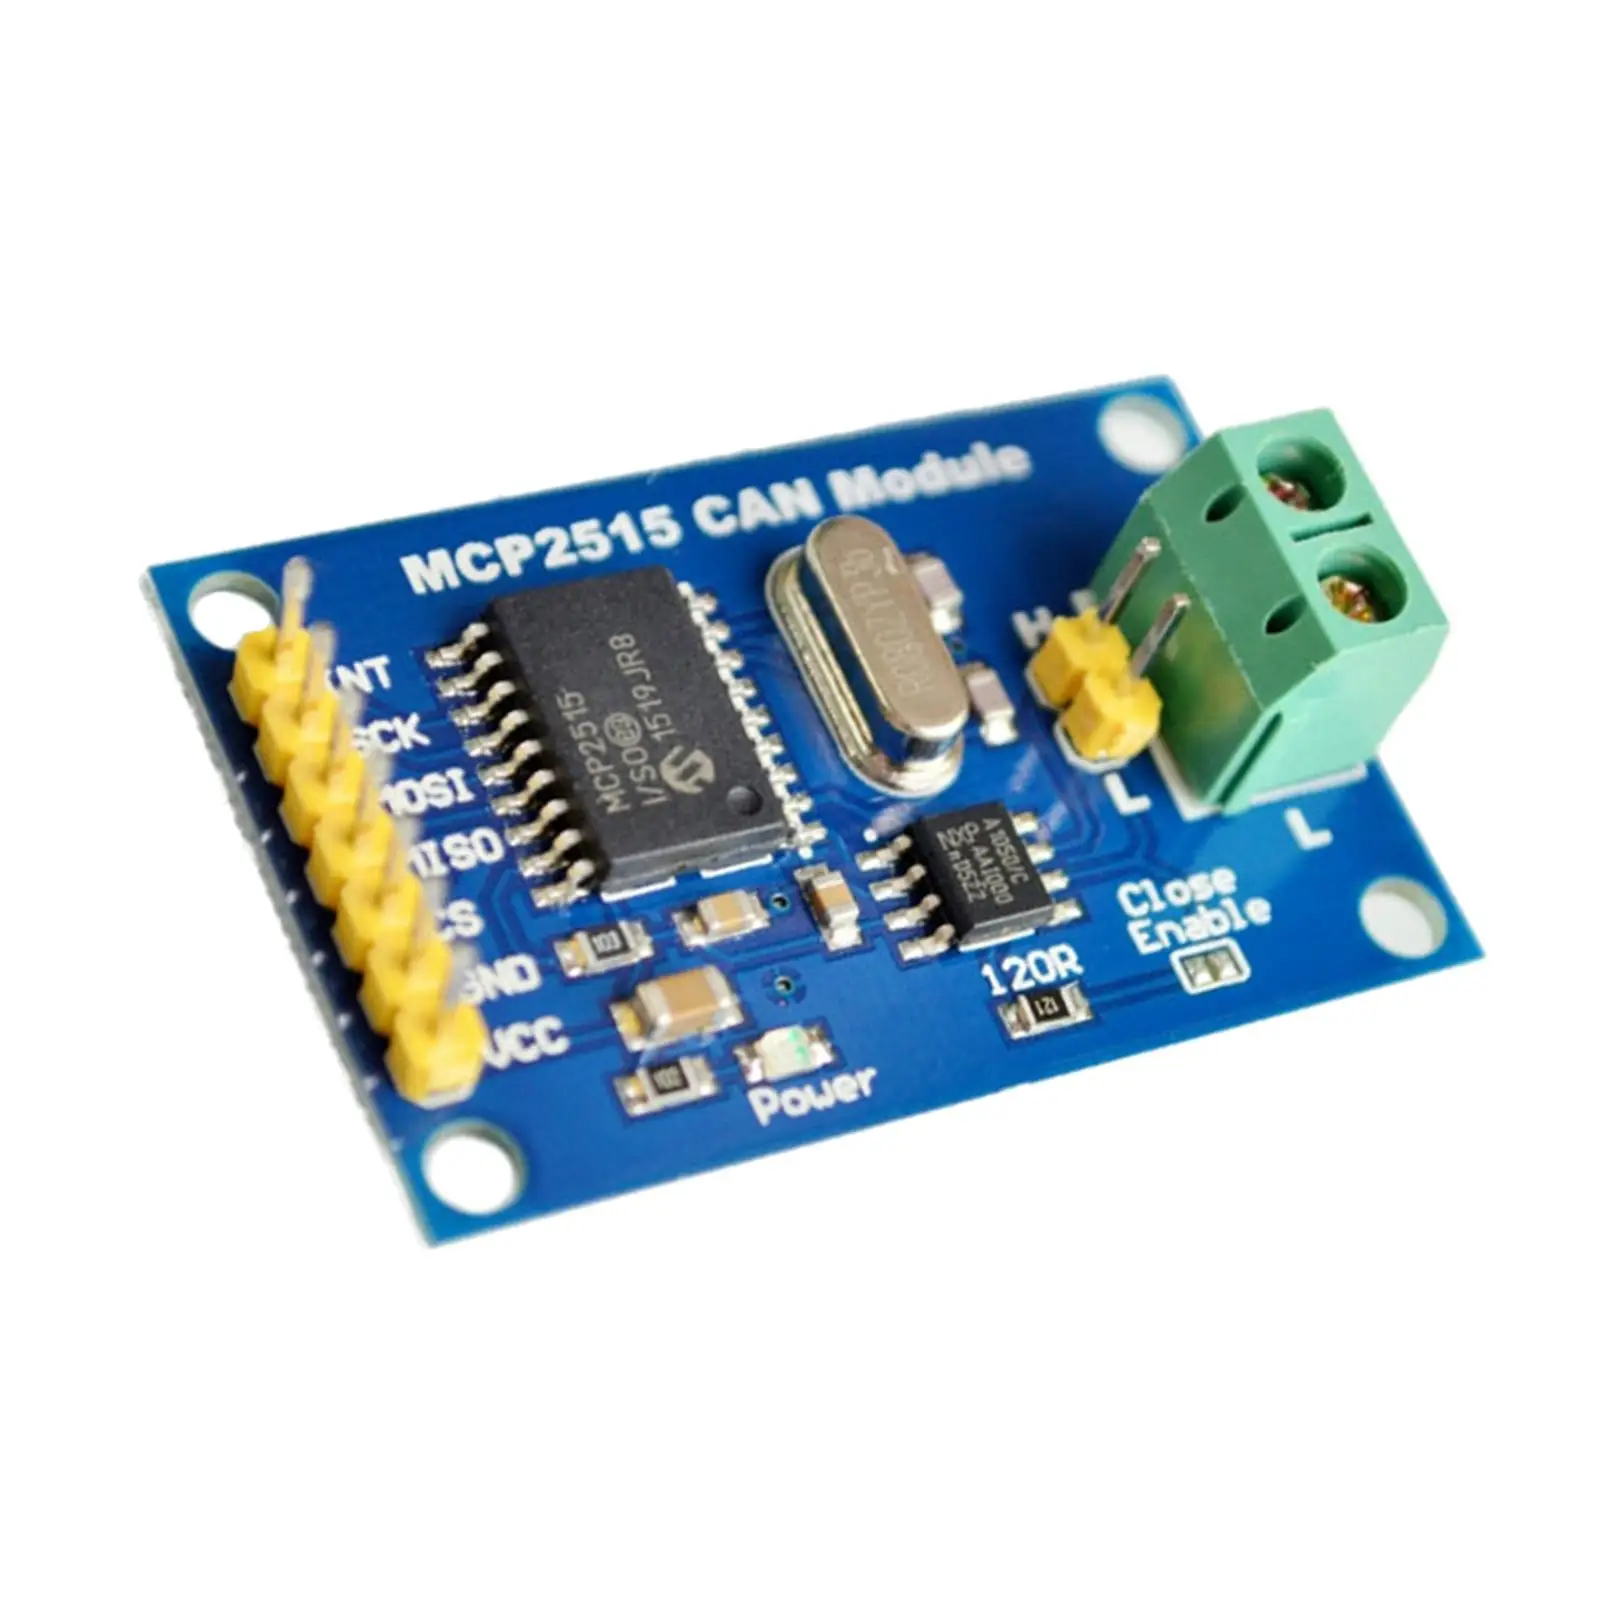 MCP2515 Module 120 Ohm Termination Resistors Replace Parts Accessory